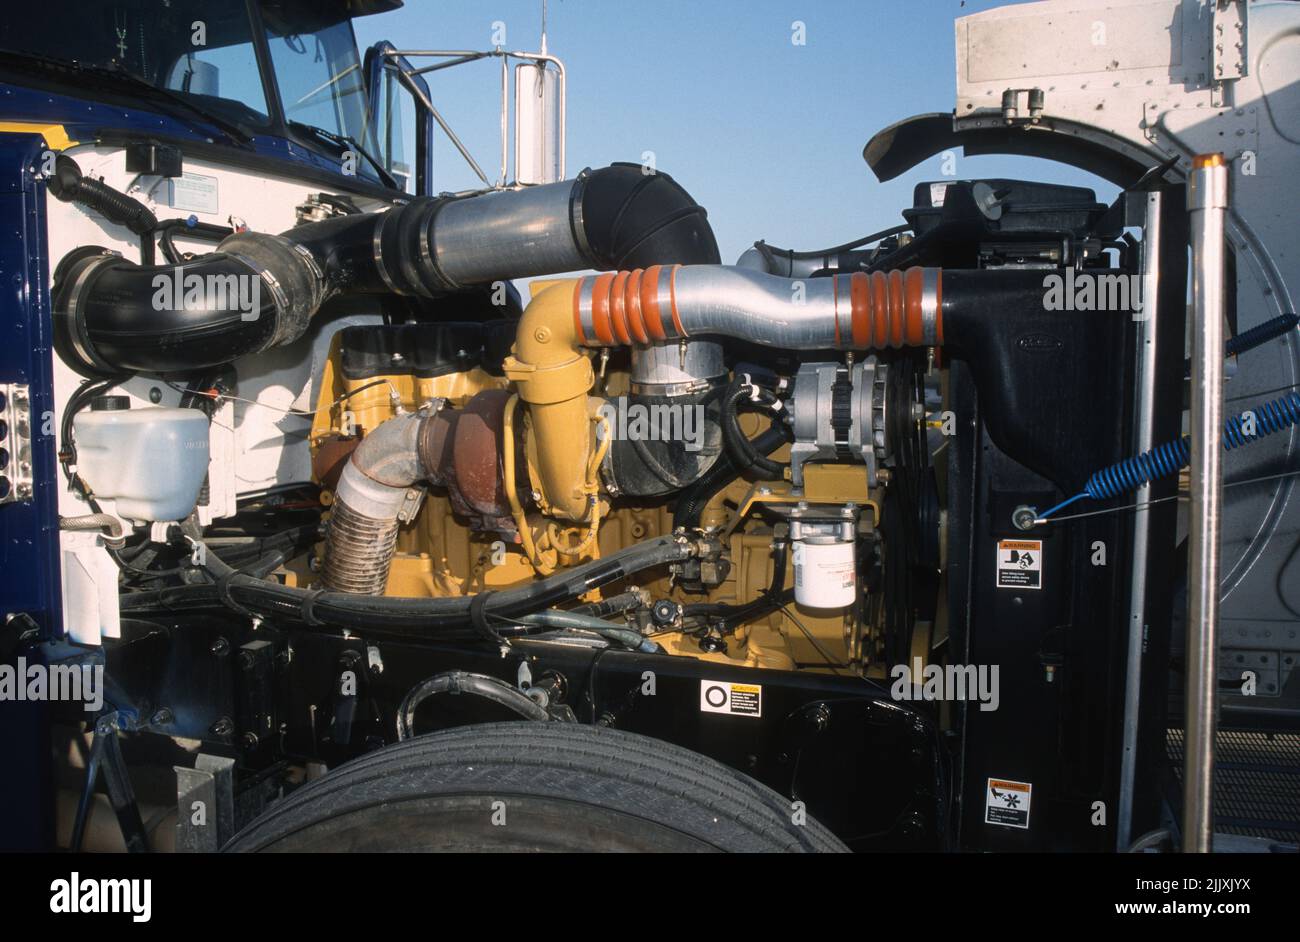 Caterpillar diesel truck engine Stock Photo